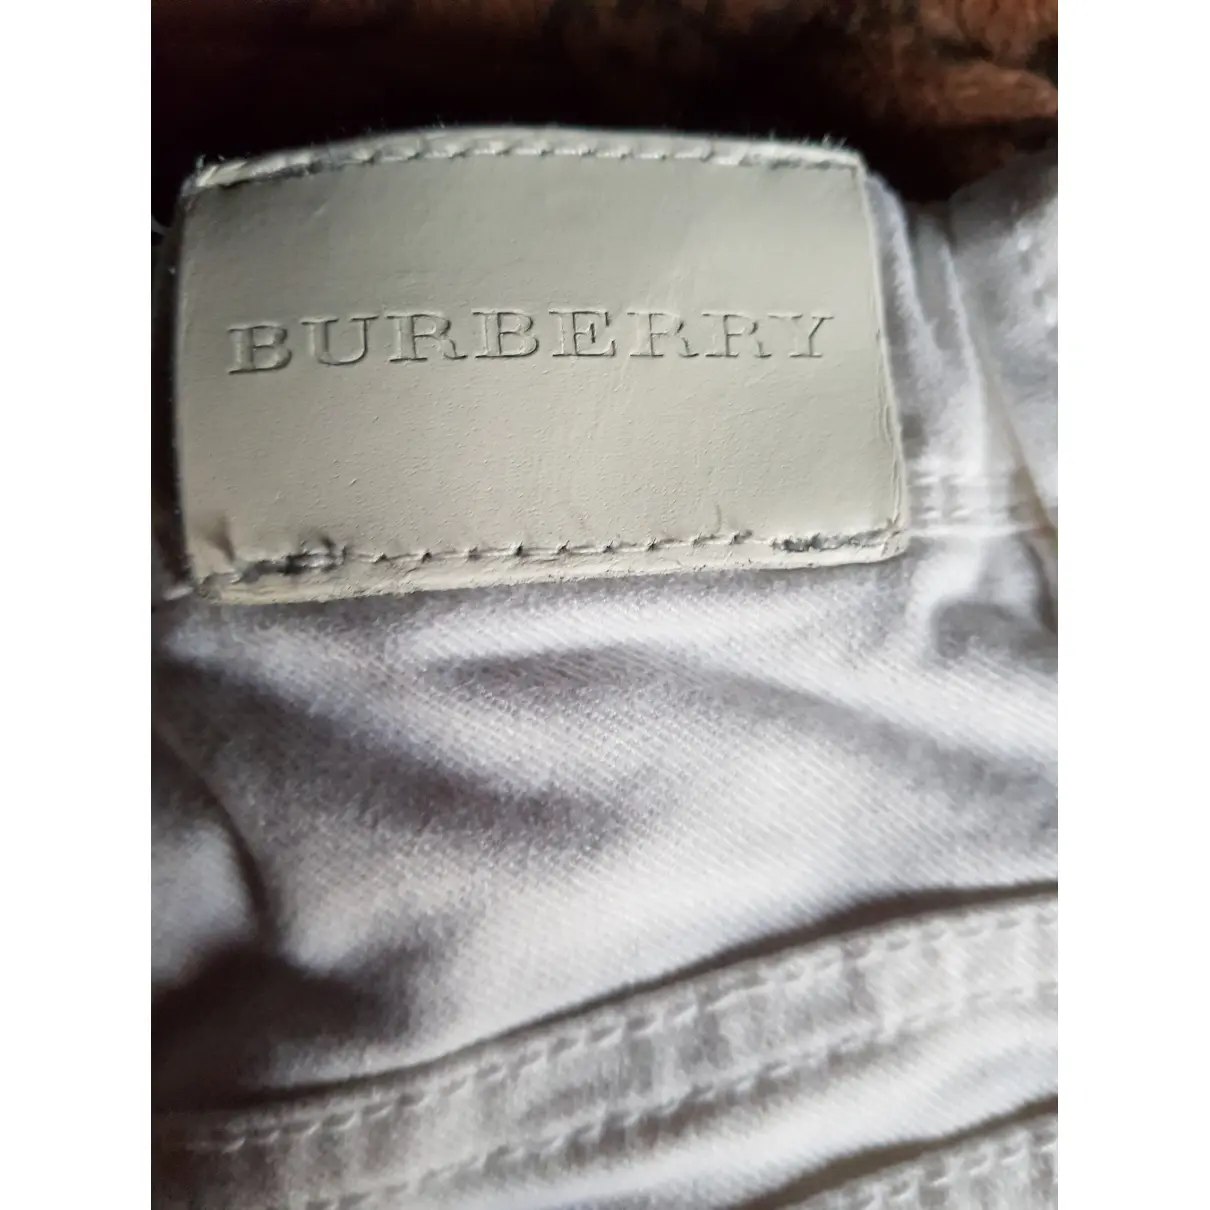 Luxury Burberry Trousers Kids